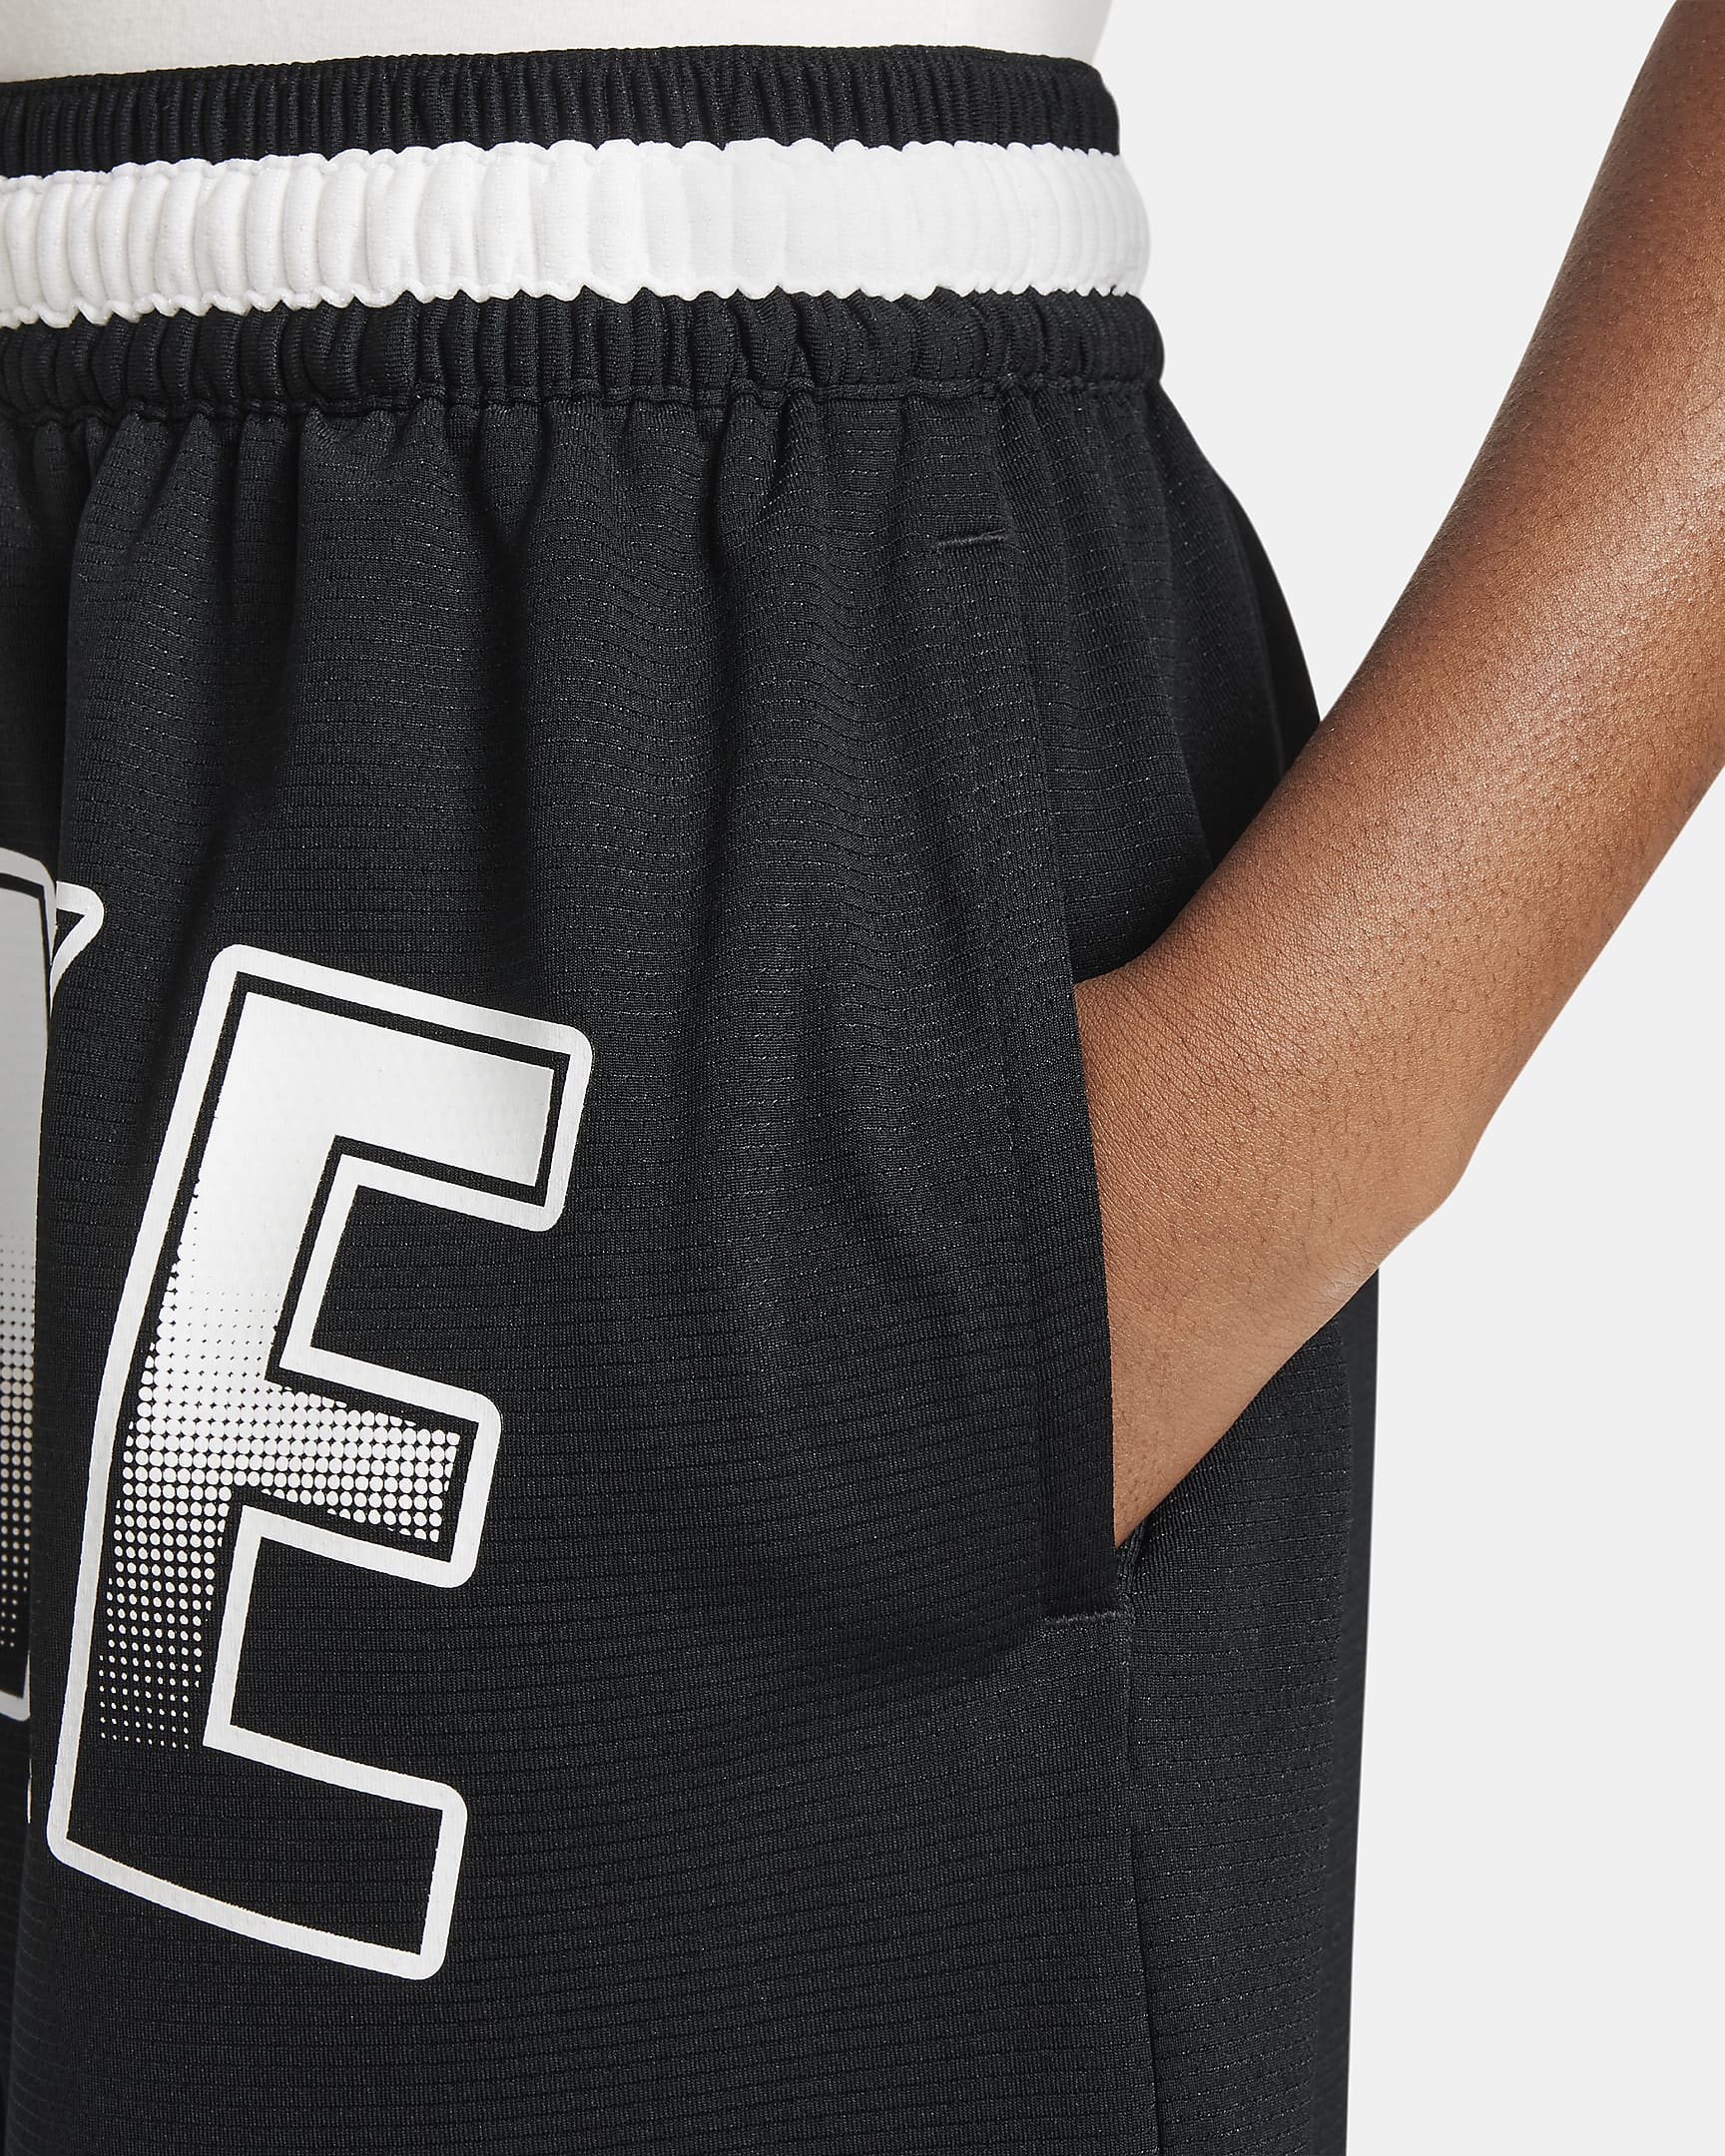 Nike DNA Culture of Basketball Big Kids' Dri-FIT Shorts - Black/White